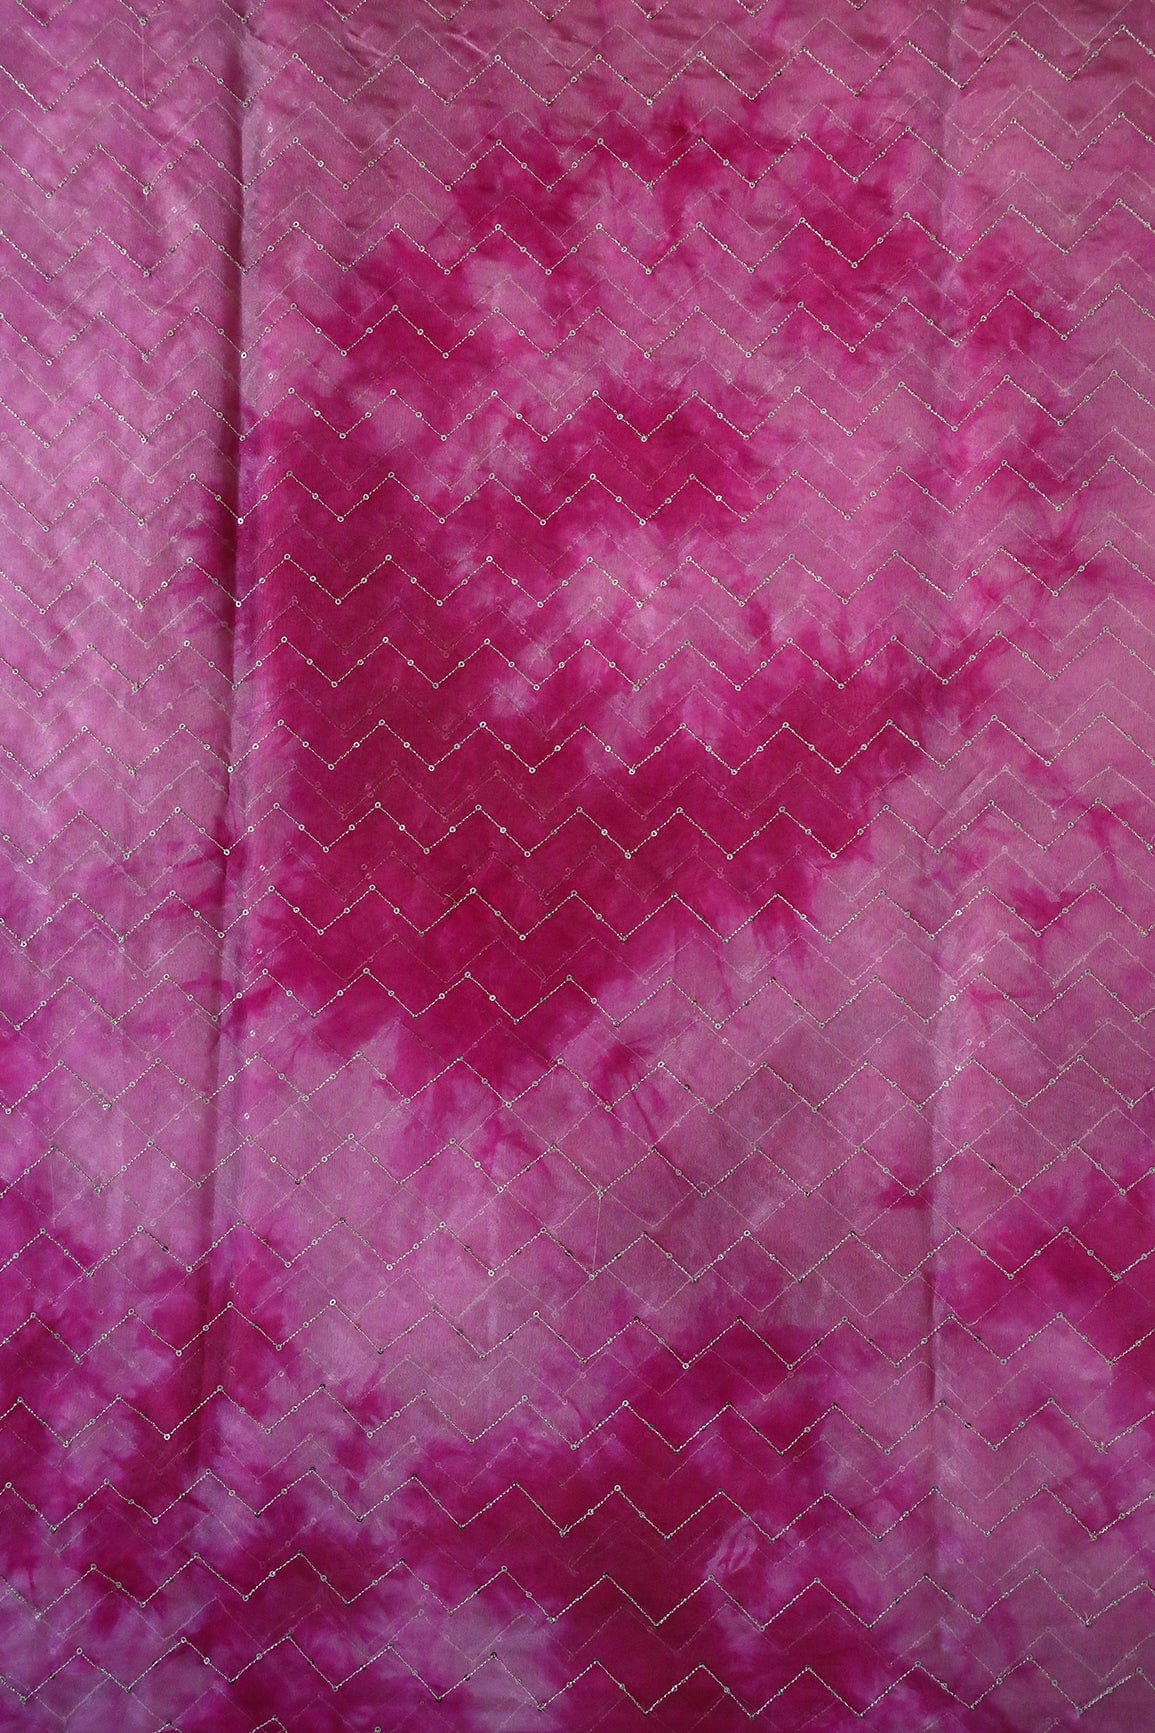 doeraa Embroidery Fabrics Gold Sequins Chevron Embroidery Work On Tie & Dye Dark Pink Organza Fabric